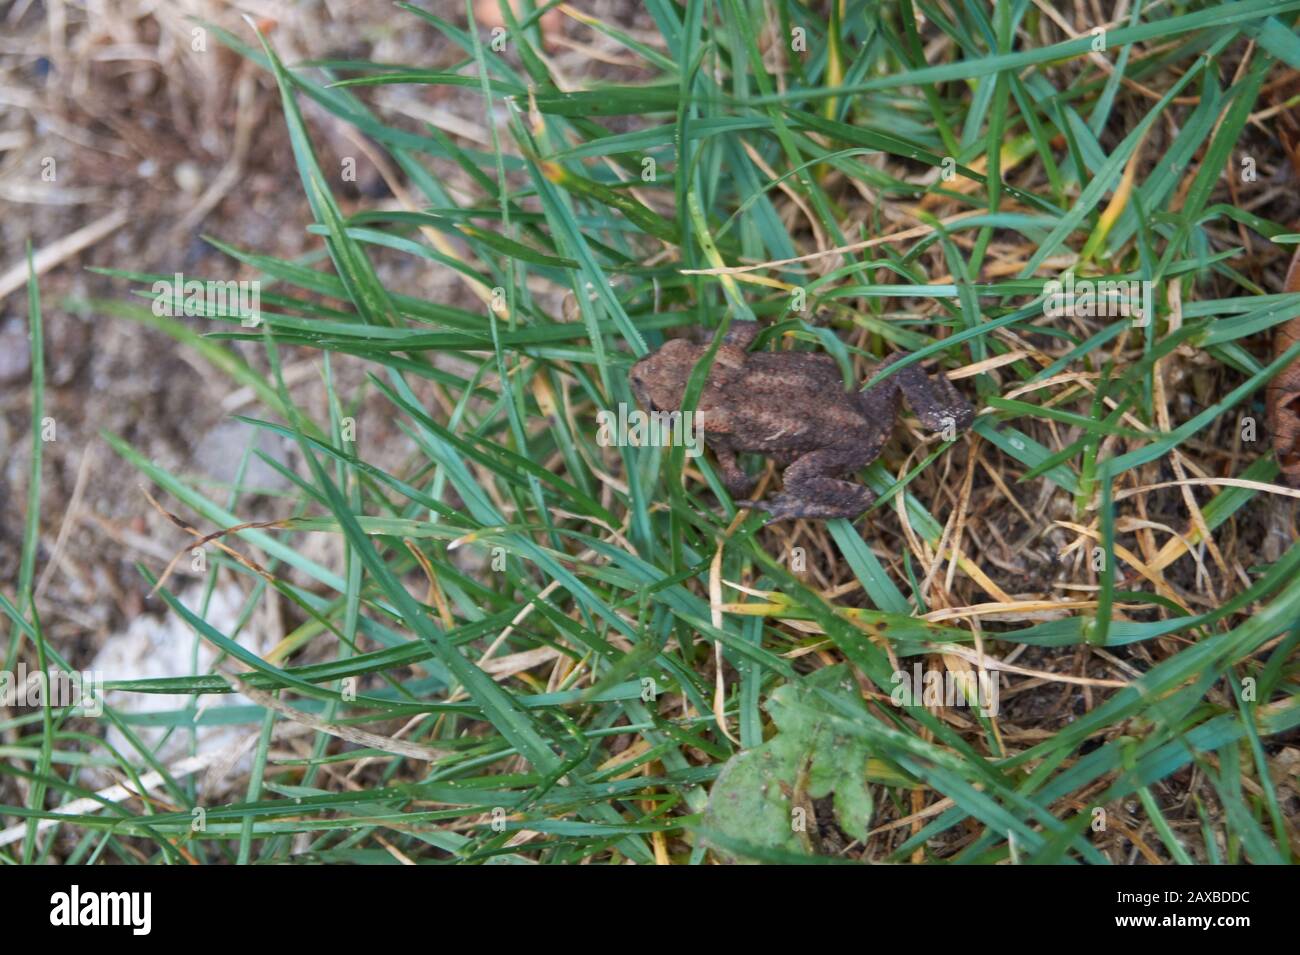 Tiny frog in garden grass Stock Photo